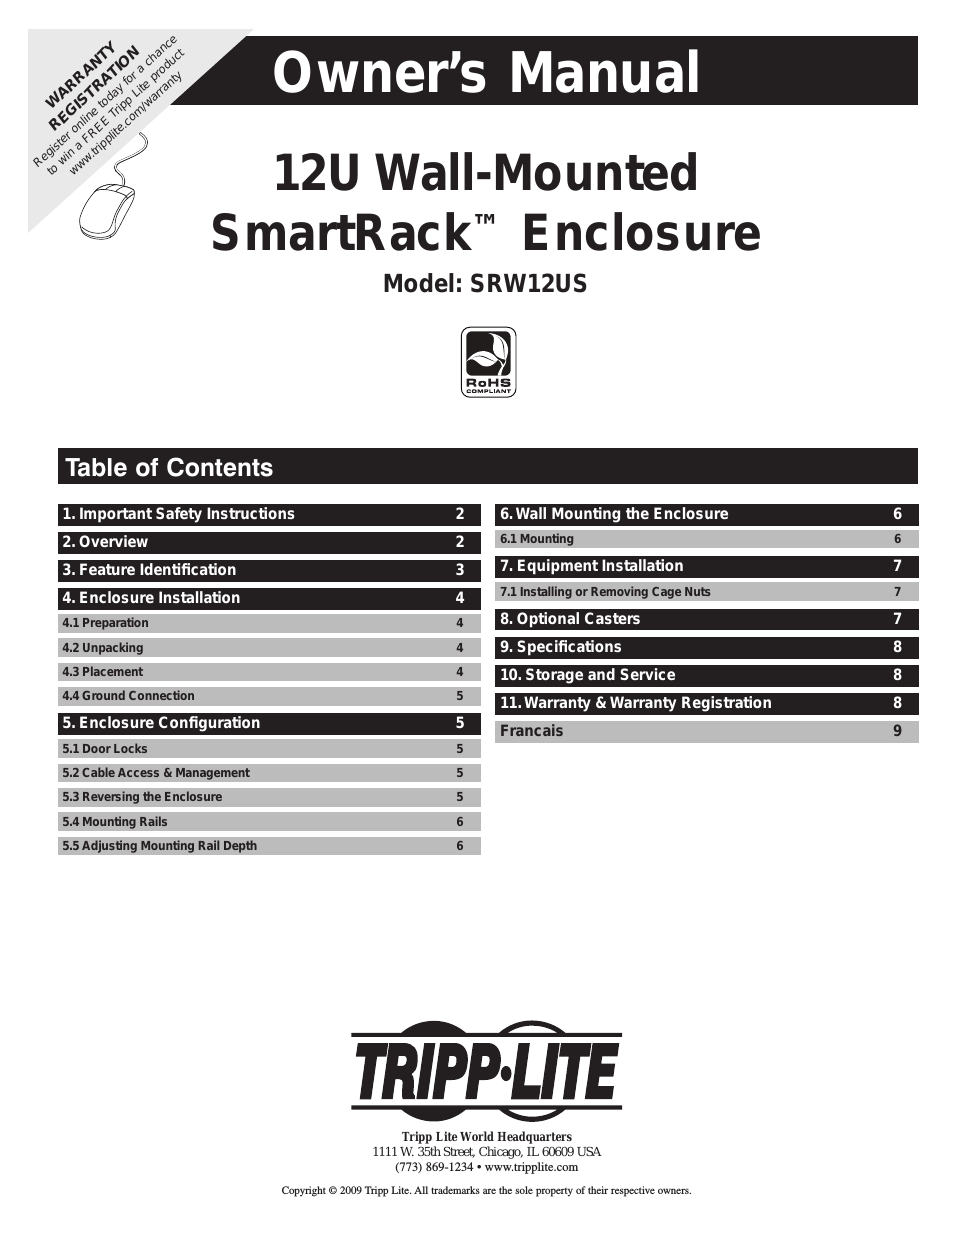 12U Wall-Mounted SmartRack Enclosure SRW12US